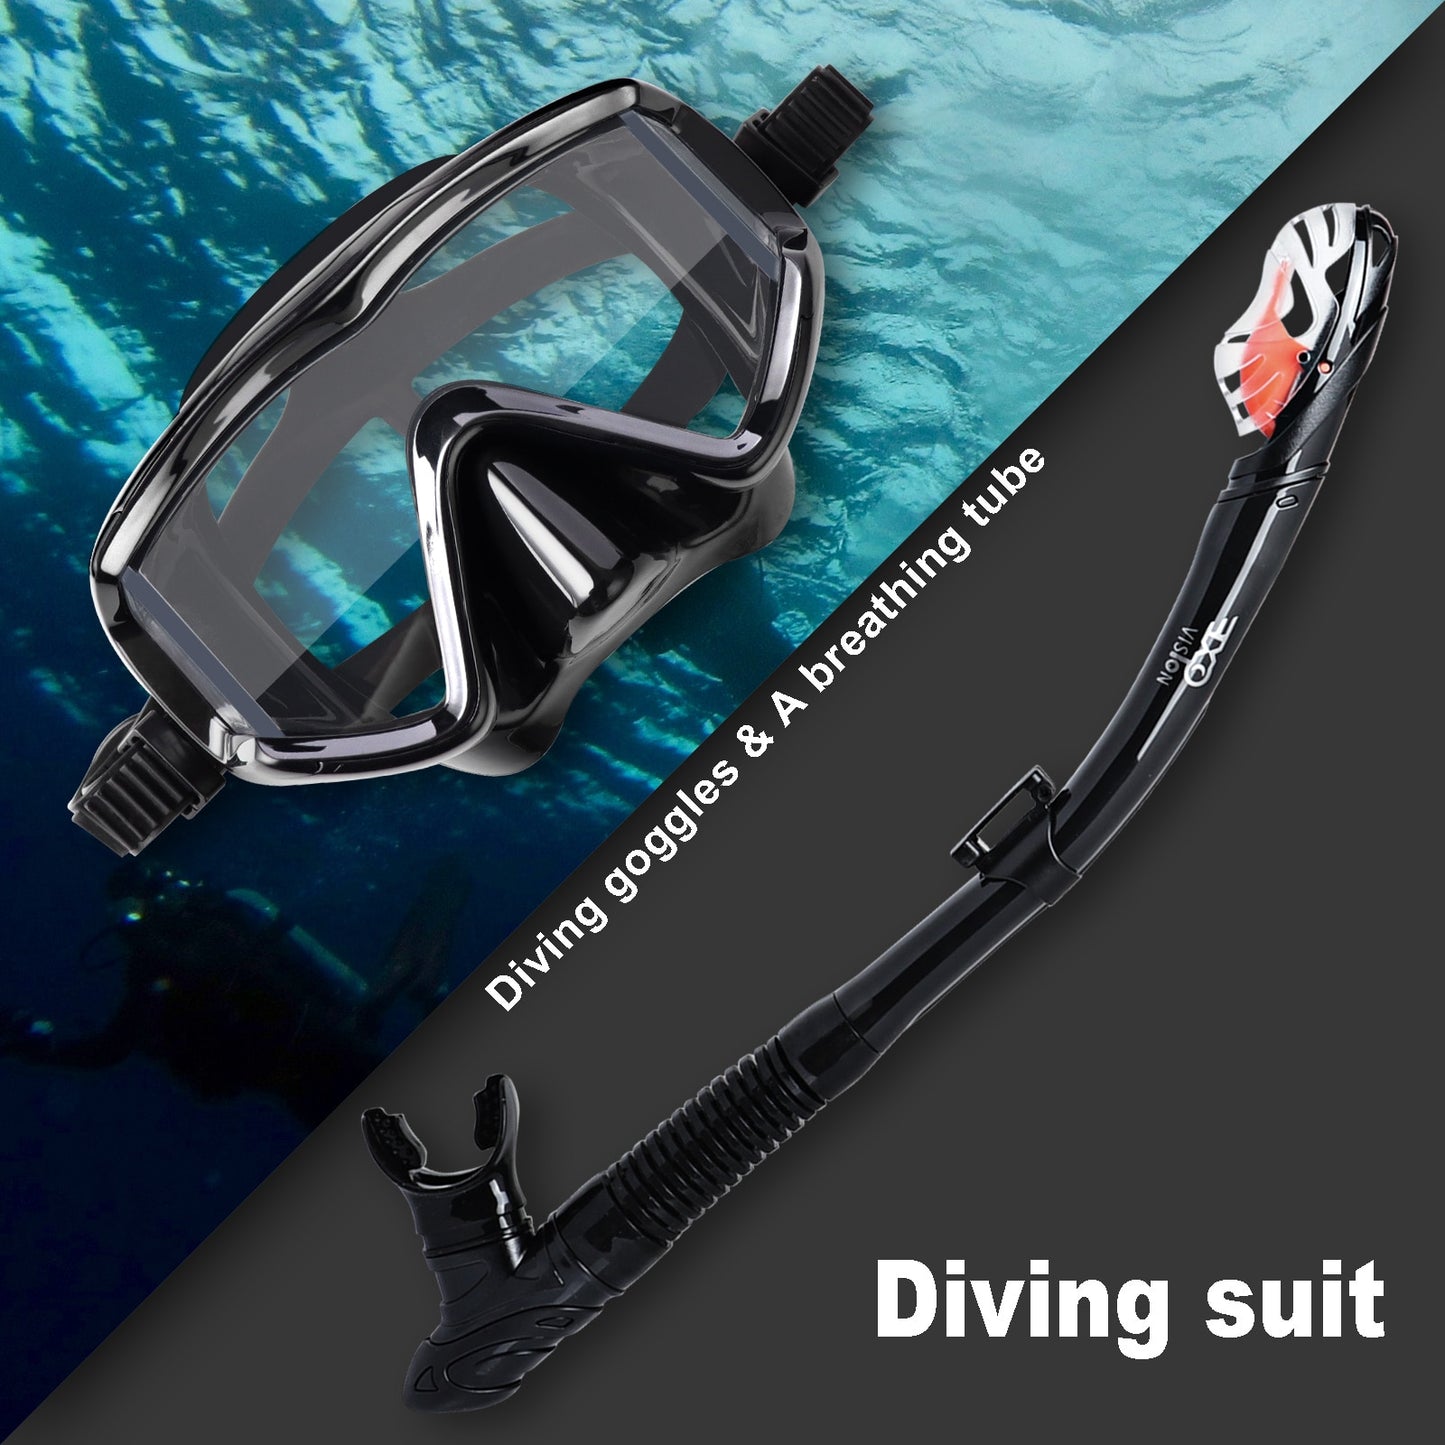 Dry Snorkel Set, Pano 3 Window Snorkel Mask, Anti-Fog Scuba Diving Goggles and Snorkel, Professional Adult Snorkeling Swim Mask